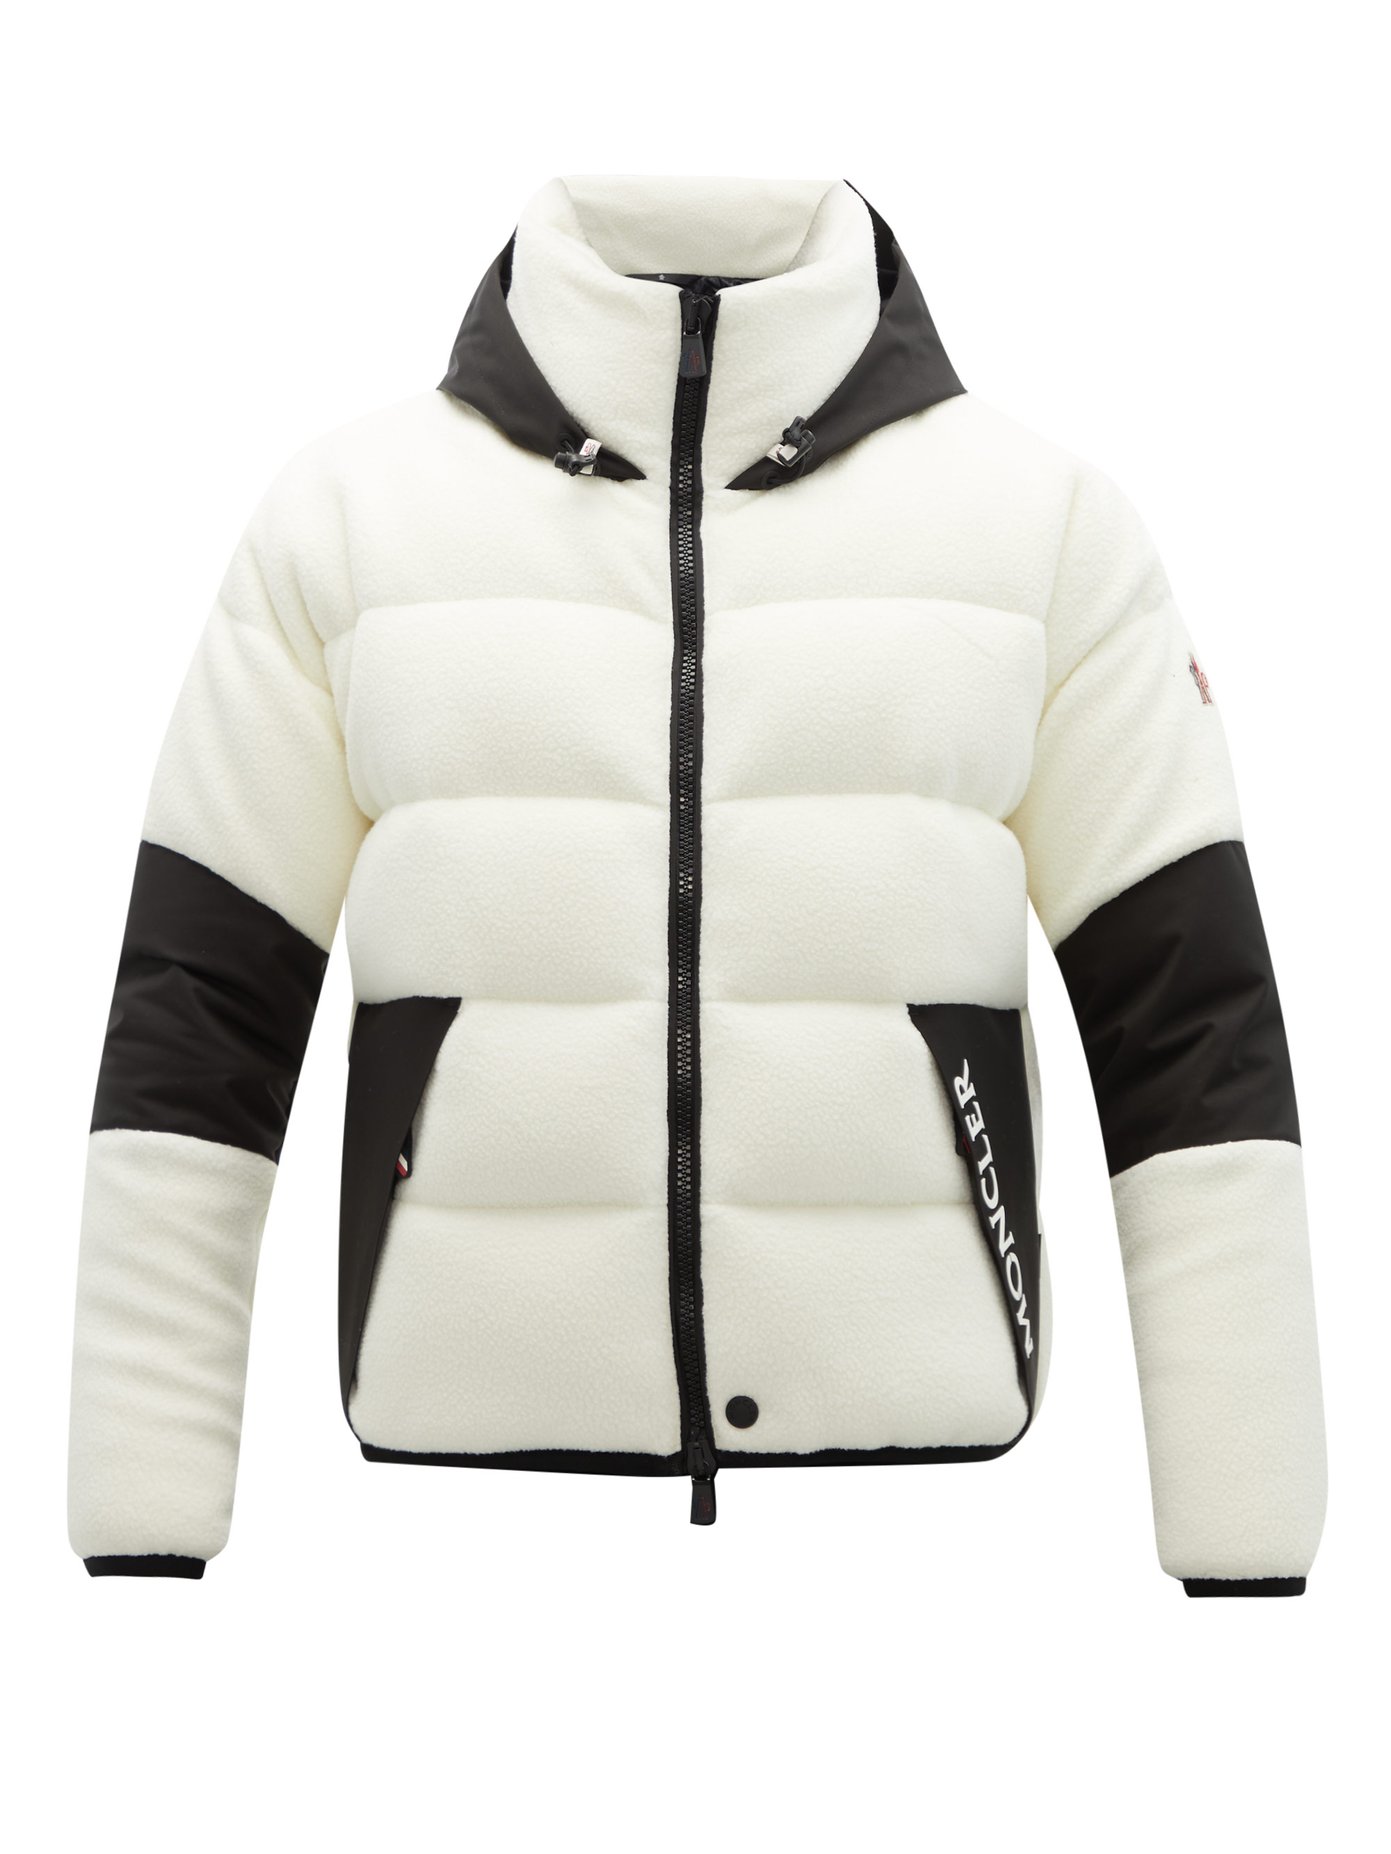 moncler grenoble fleece jacket